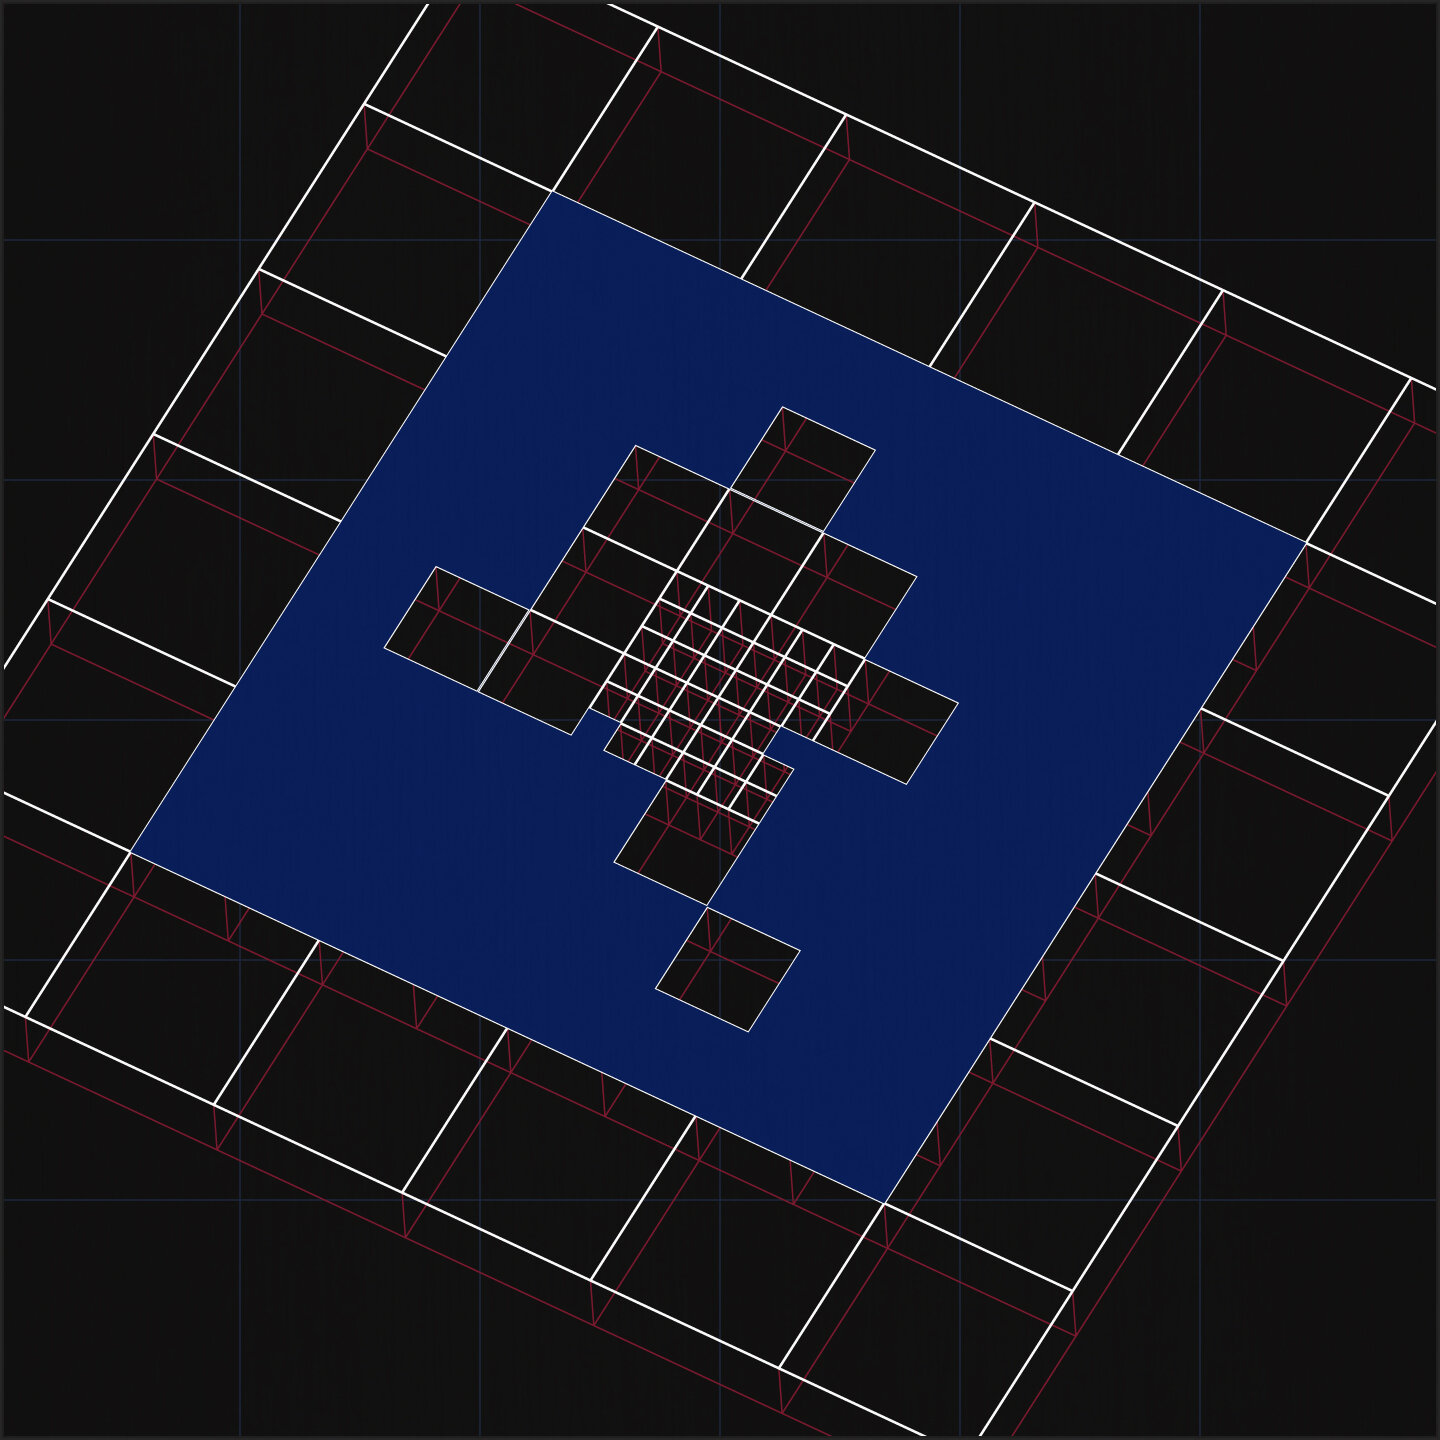 Origo-metrum-space [20200504]-b [144 - Asymmetric-Blue], acrylic on canvas